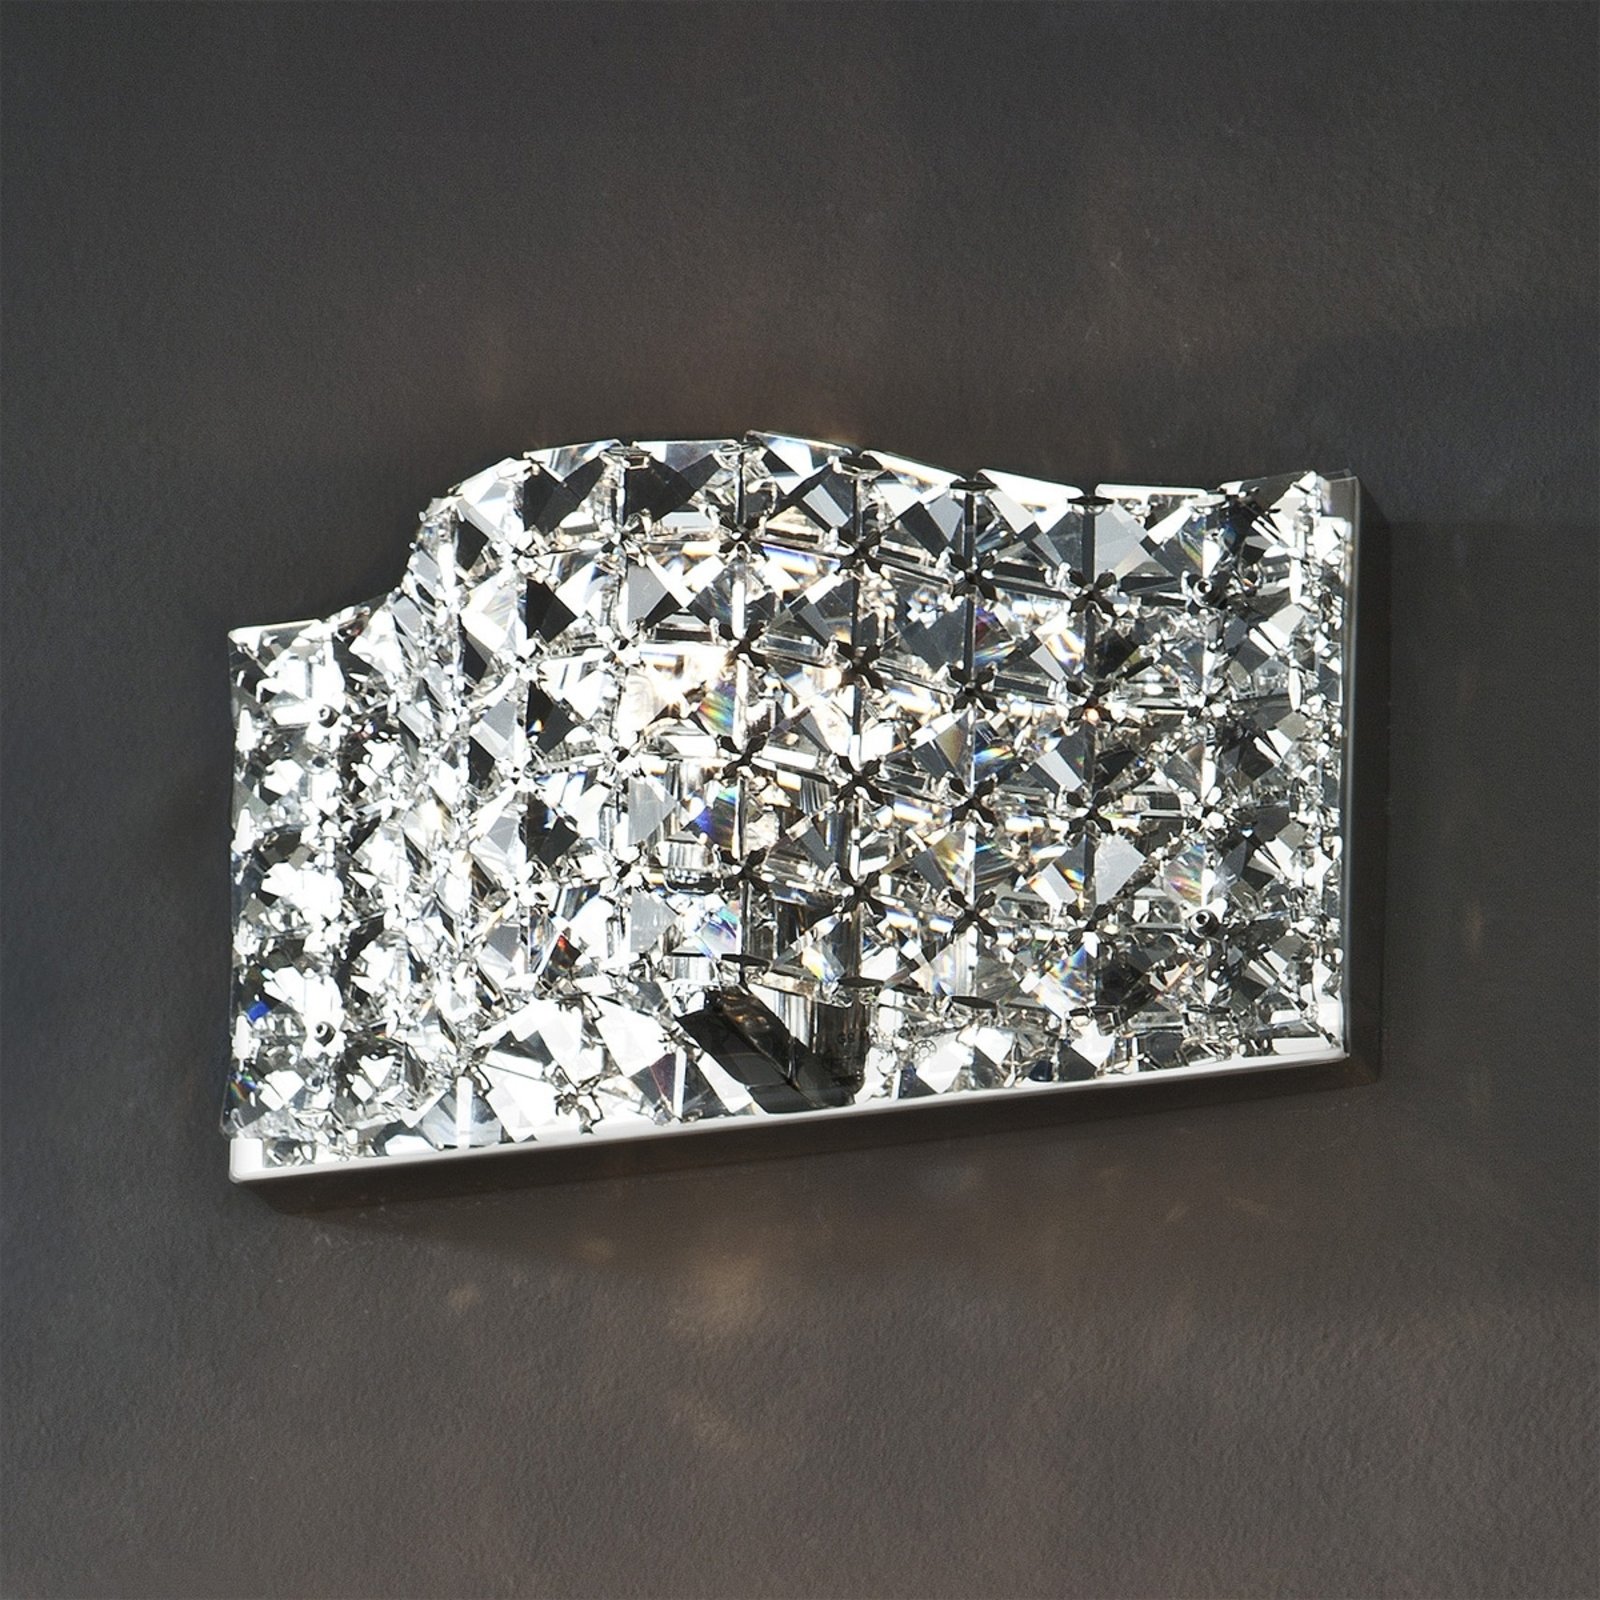 Vägglampa Onda, kristallglas, 25 cm